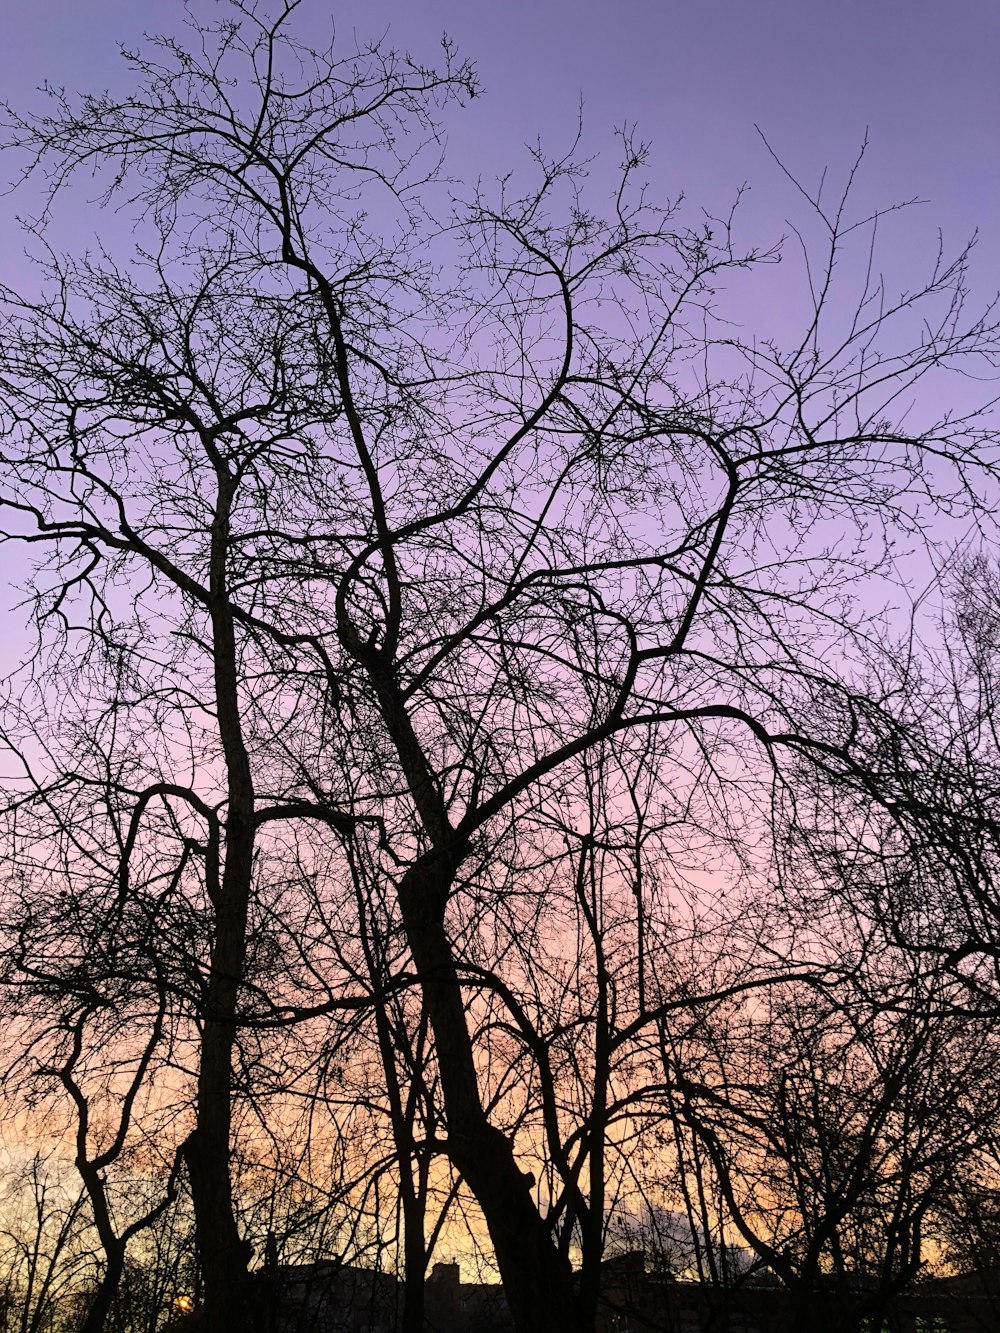 leafless trees under blue sky during daytime